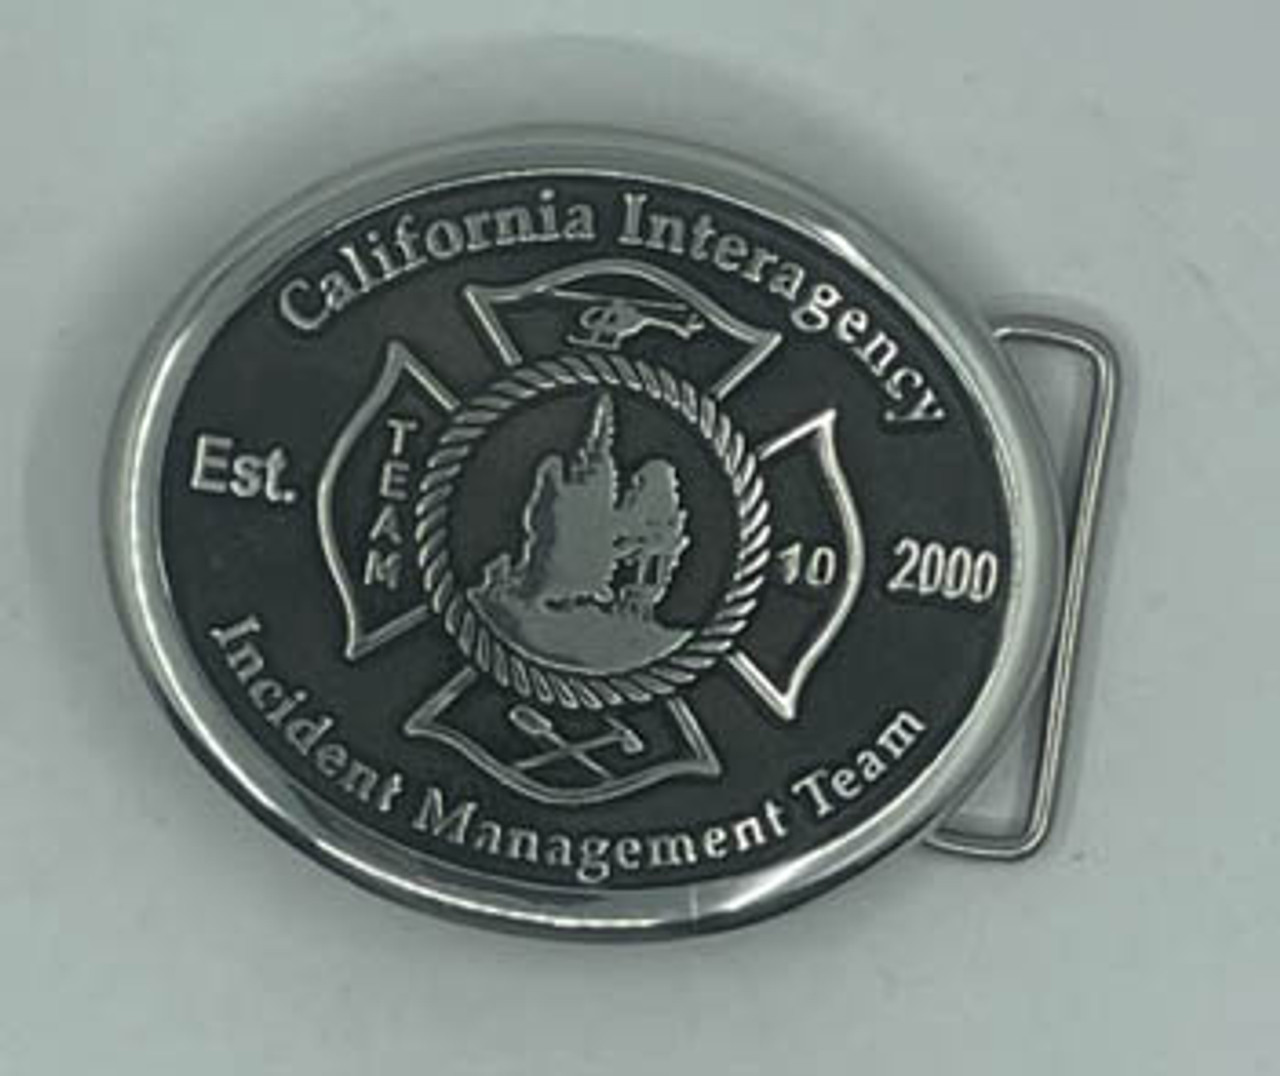 California Interagency Incident Management Team 10 Est 2000 Buckle (RESTRICTED)